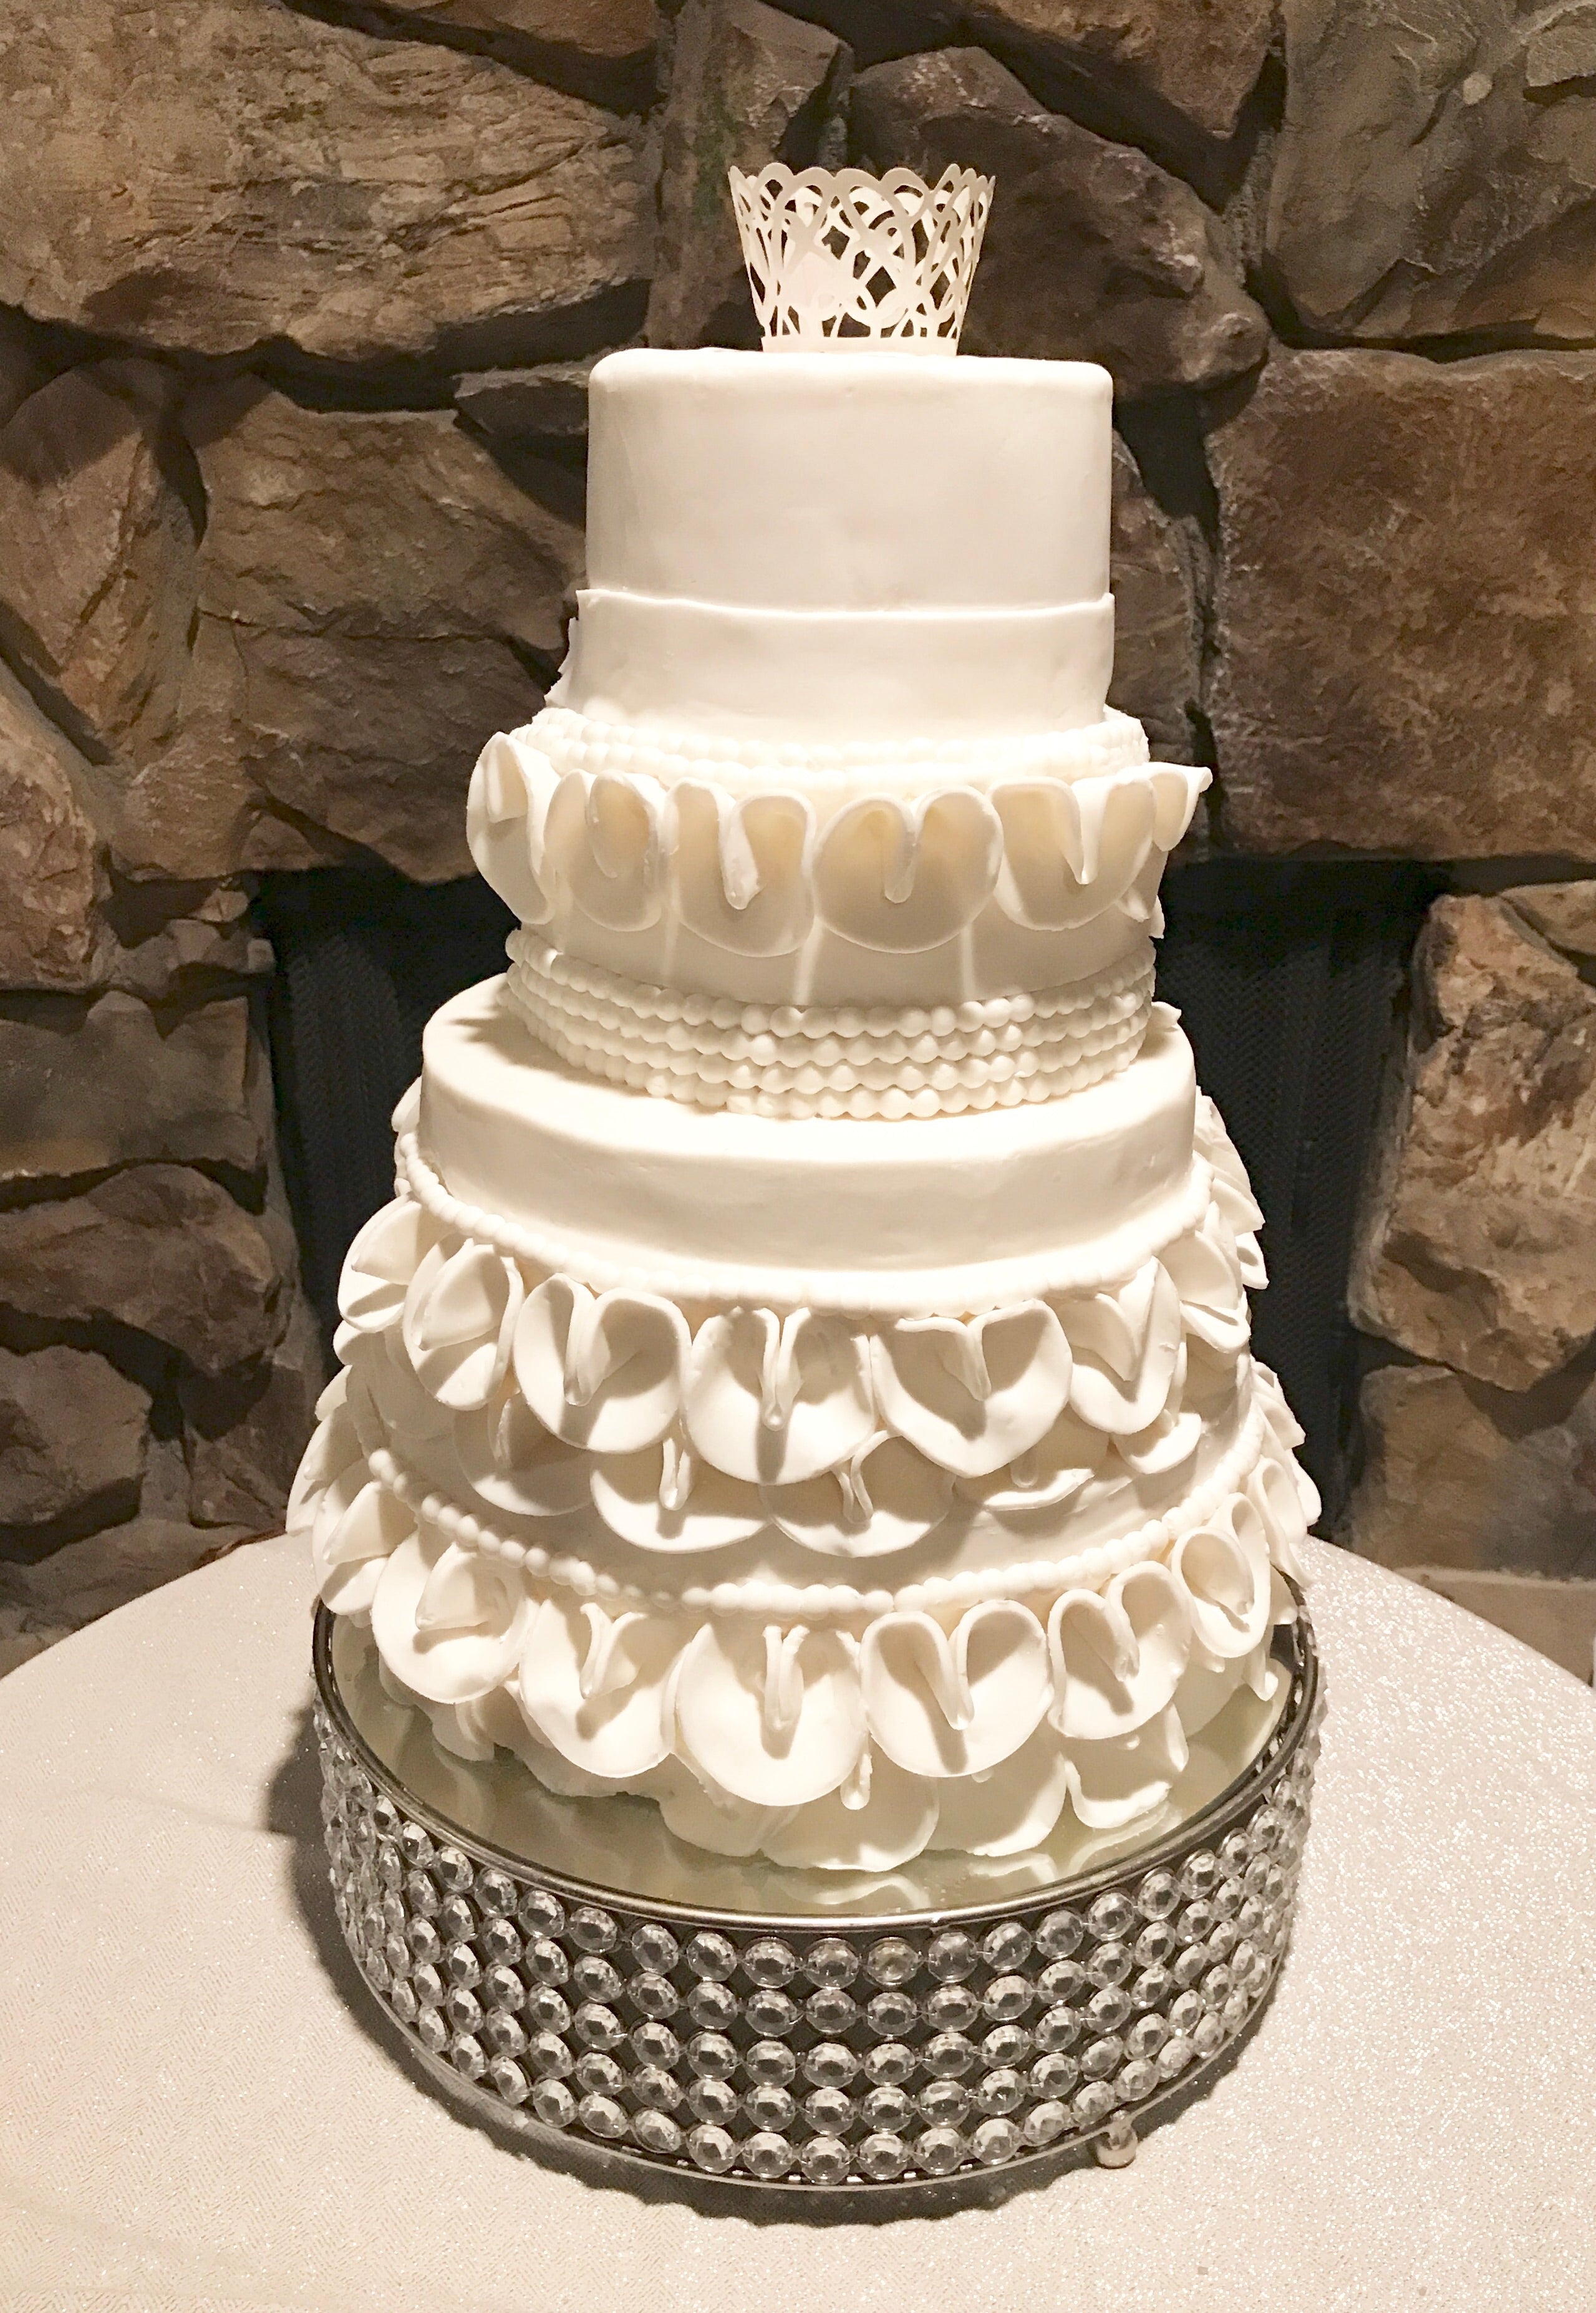 WEDDING CAKE ROYAL HIGHNESS